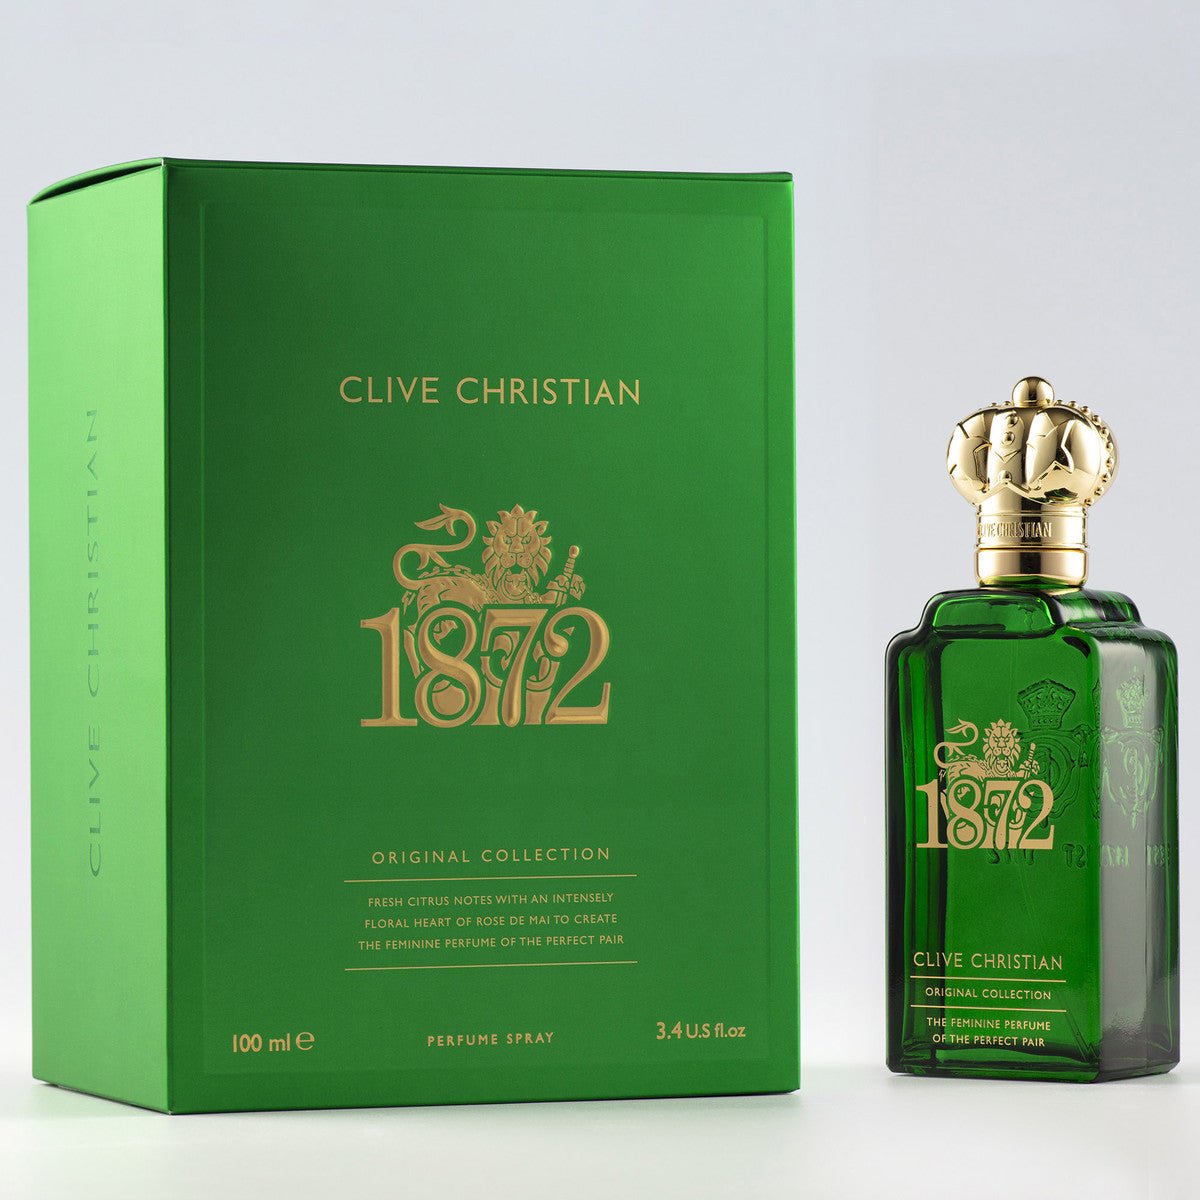 Clive Christian Original Collection 1872 Feminine Perfume | My Perfume Shop Australia